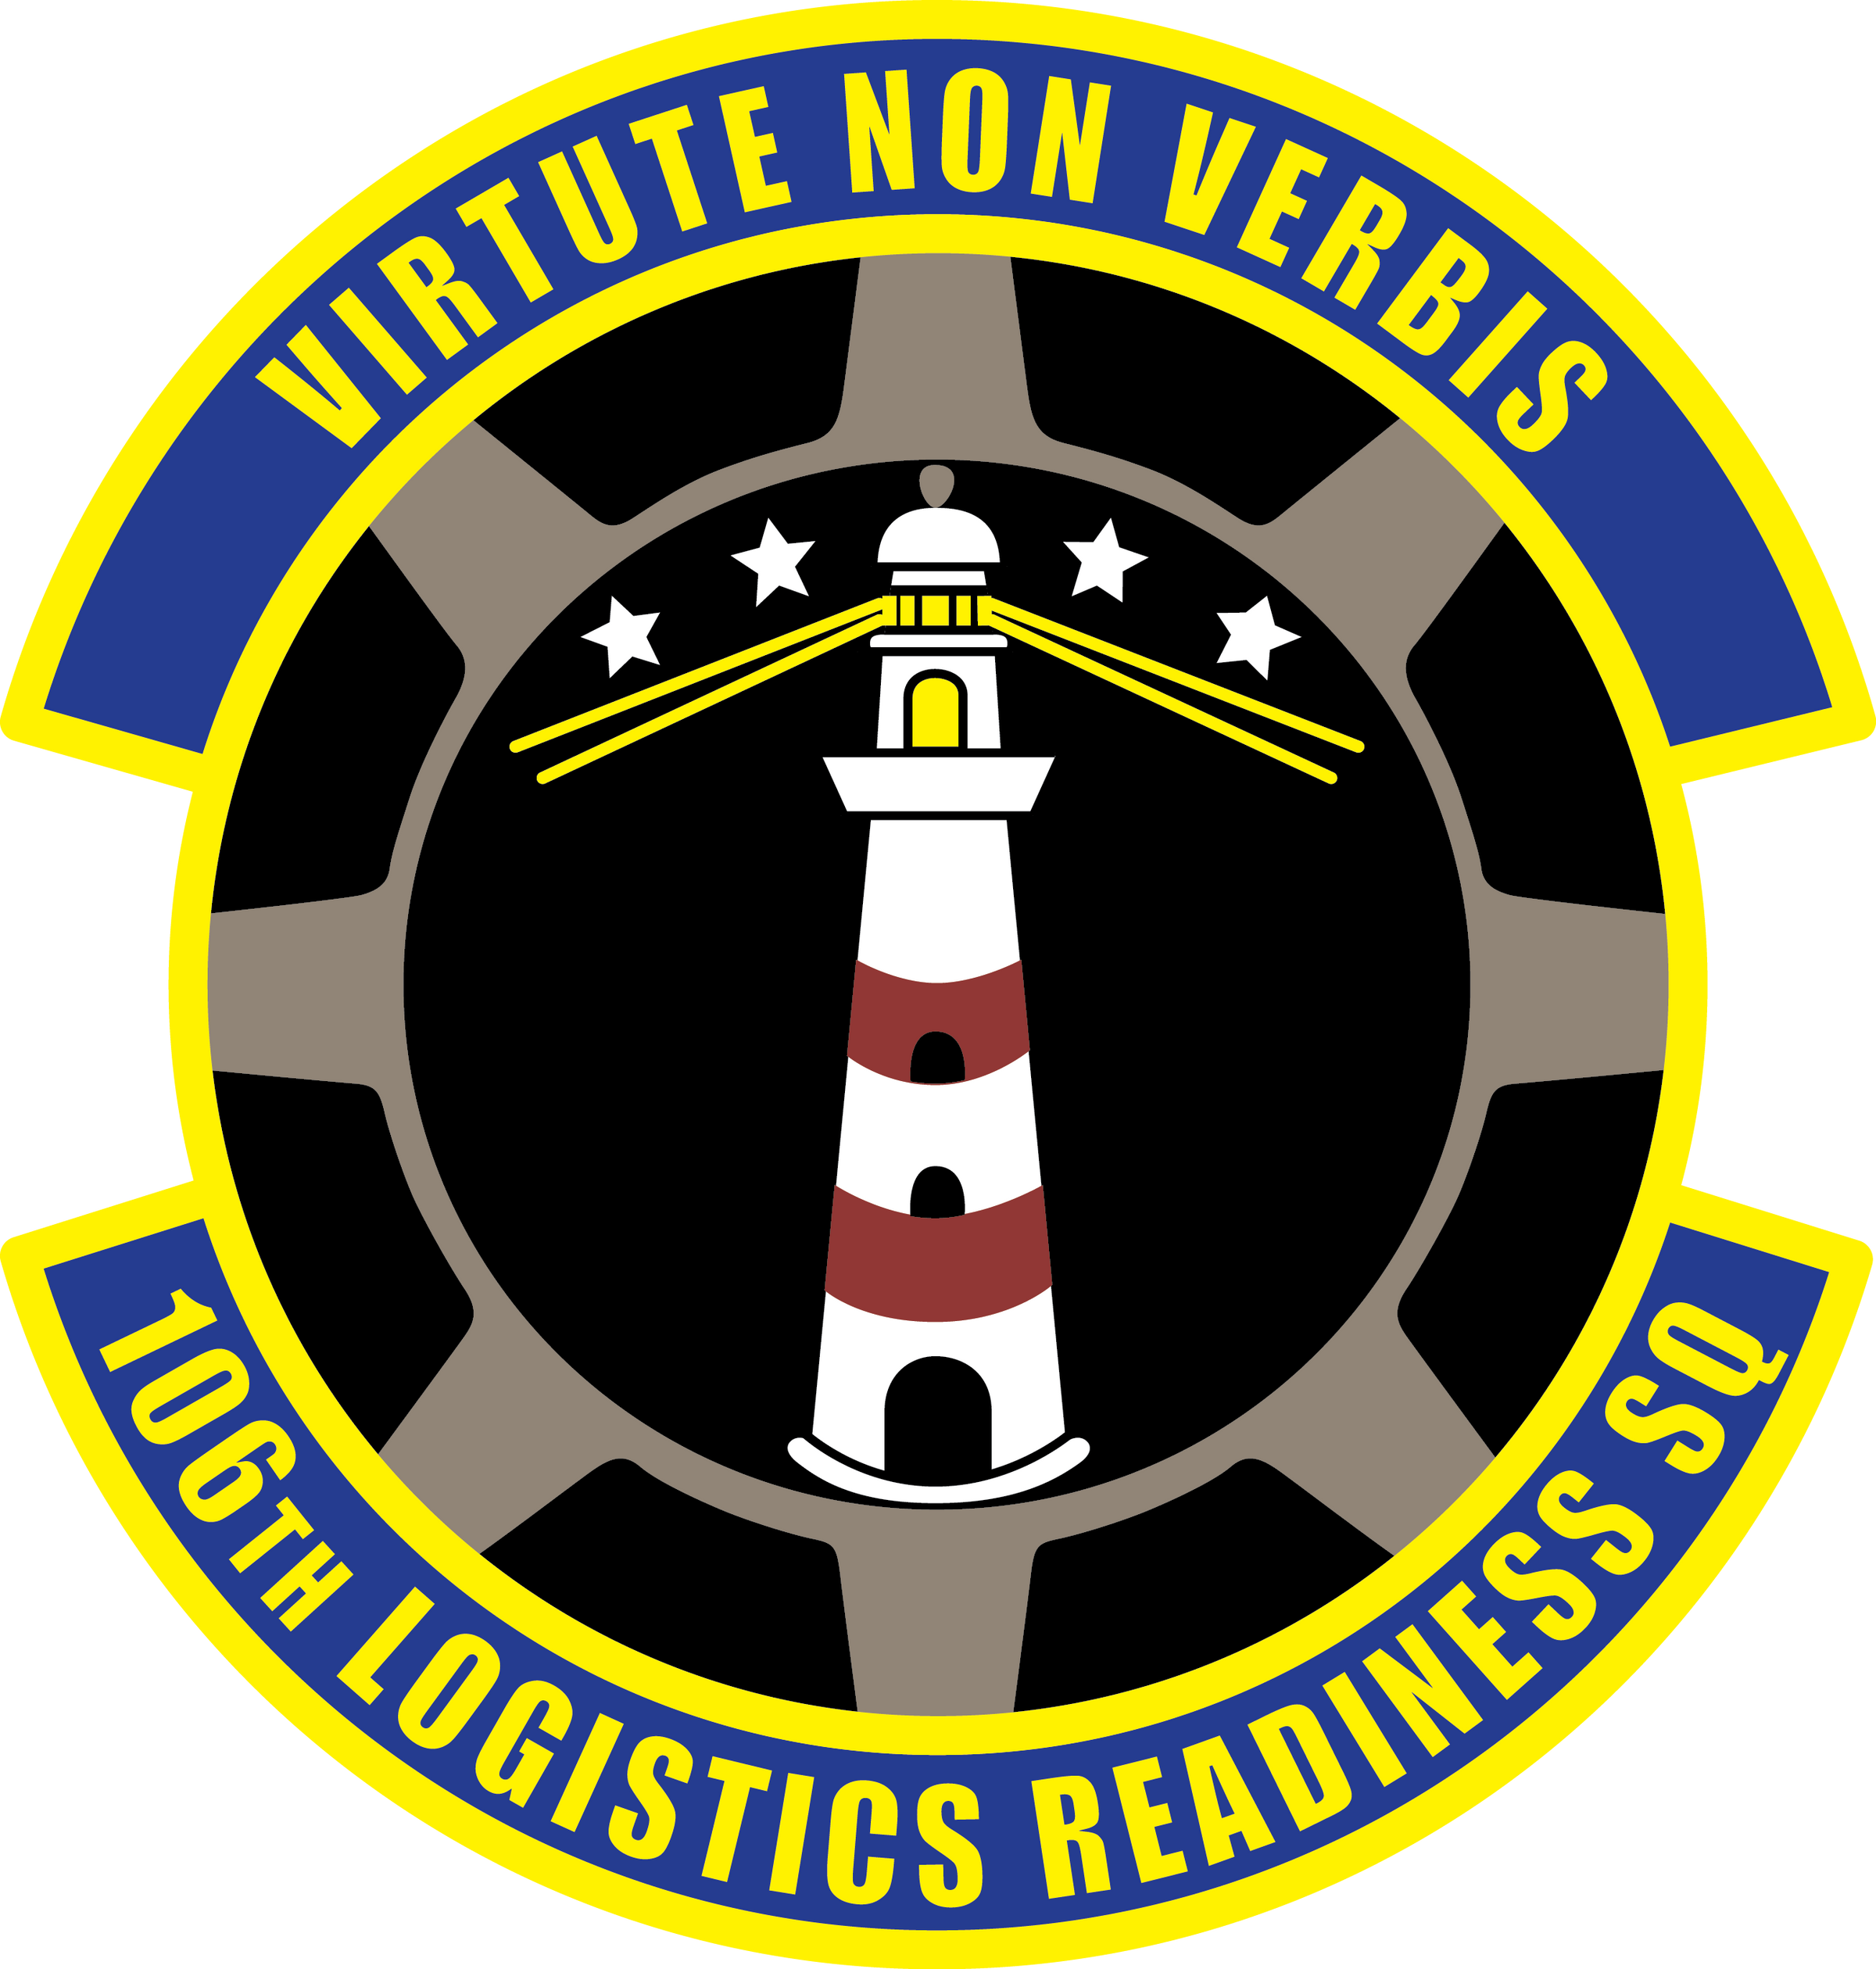 106 Logistics and Readiness Squadron